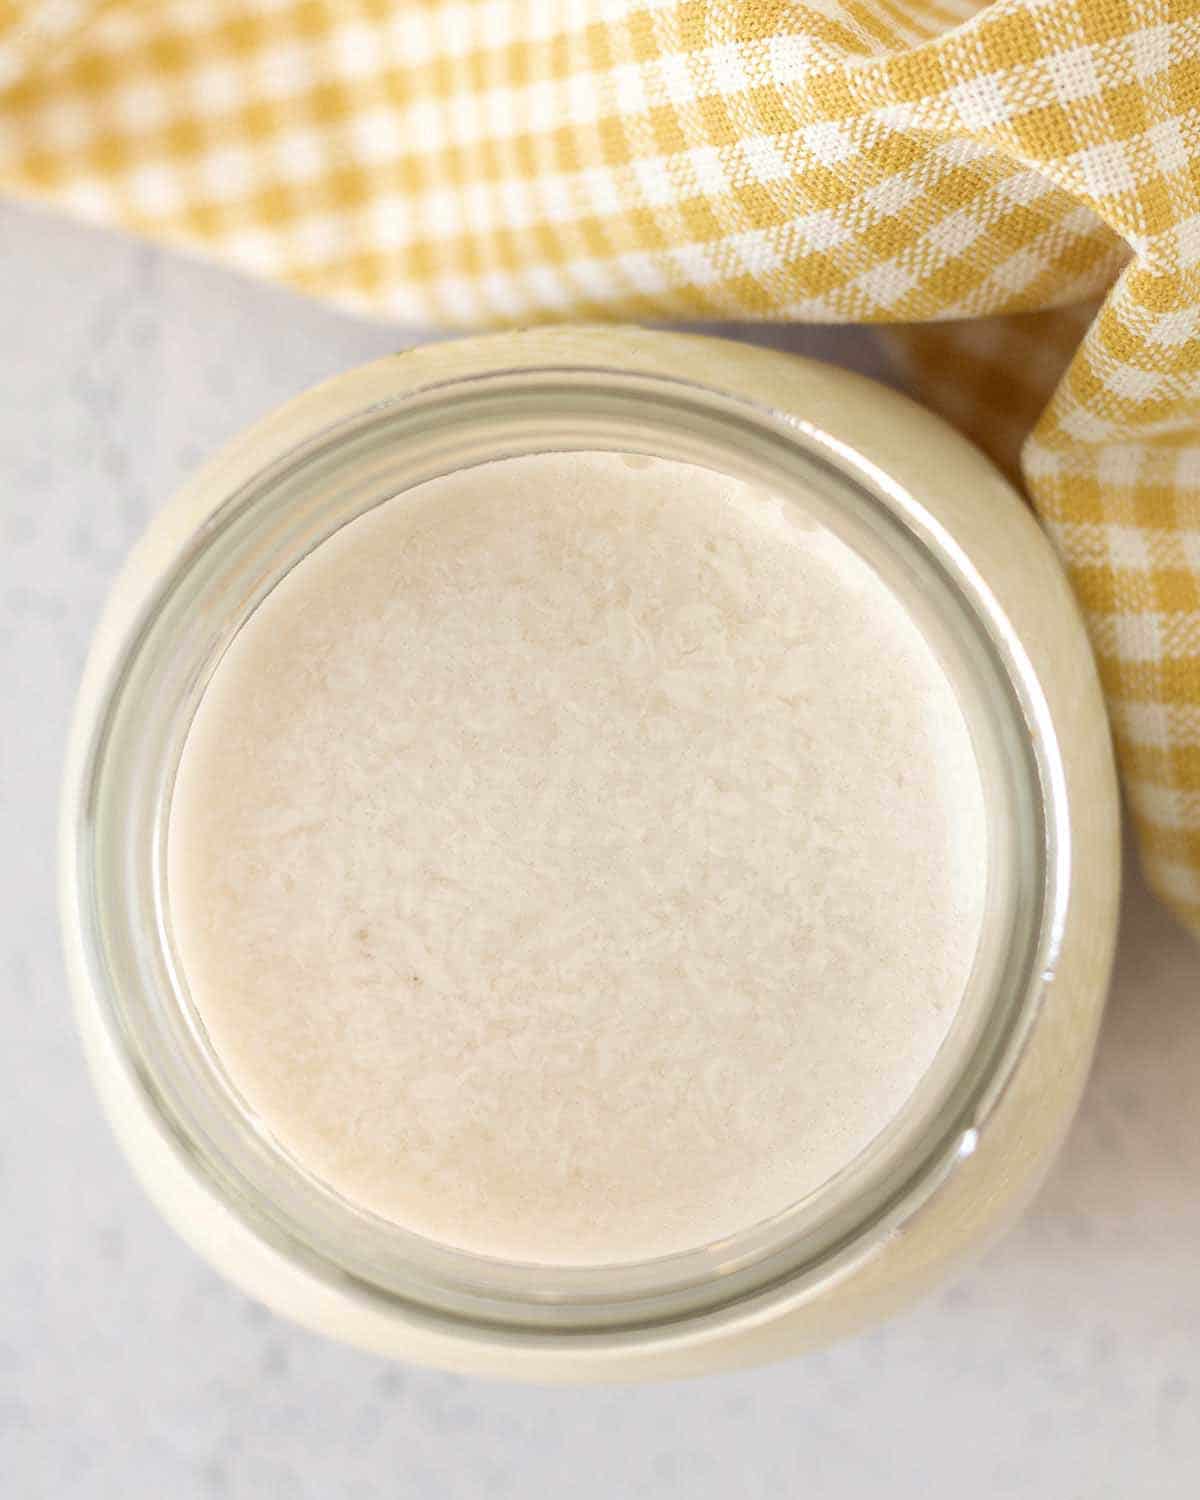 Image shows an overhead view of a mason jar of vegan buttermilk.